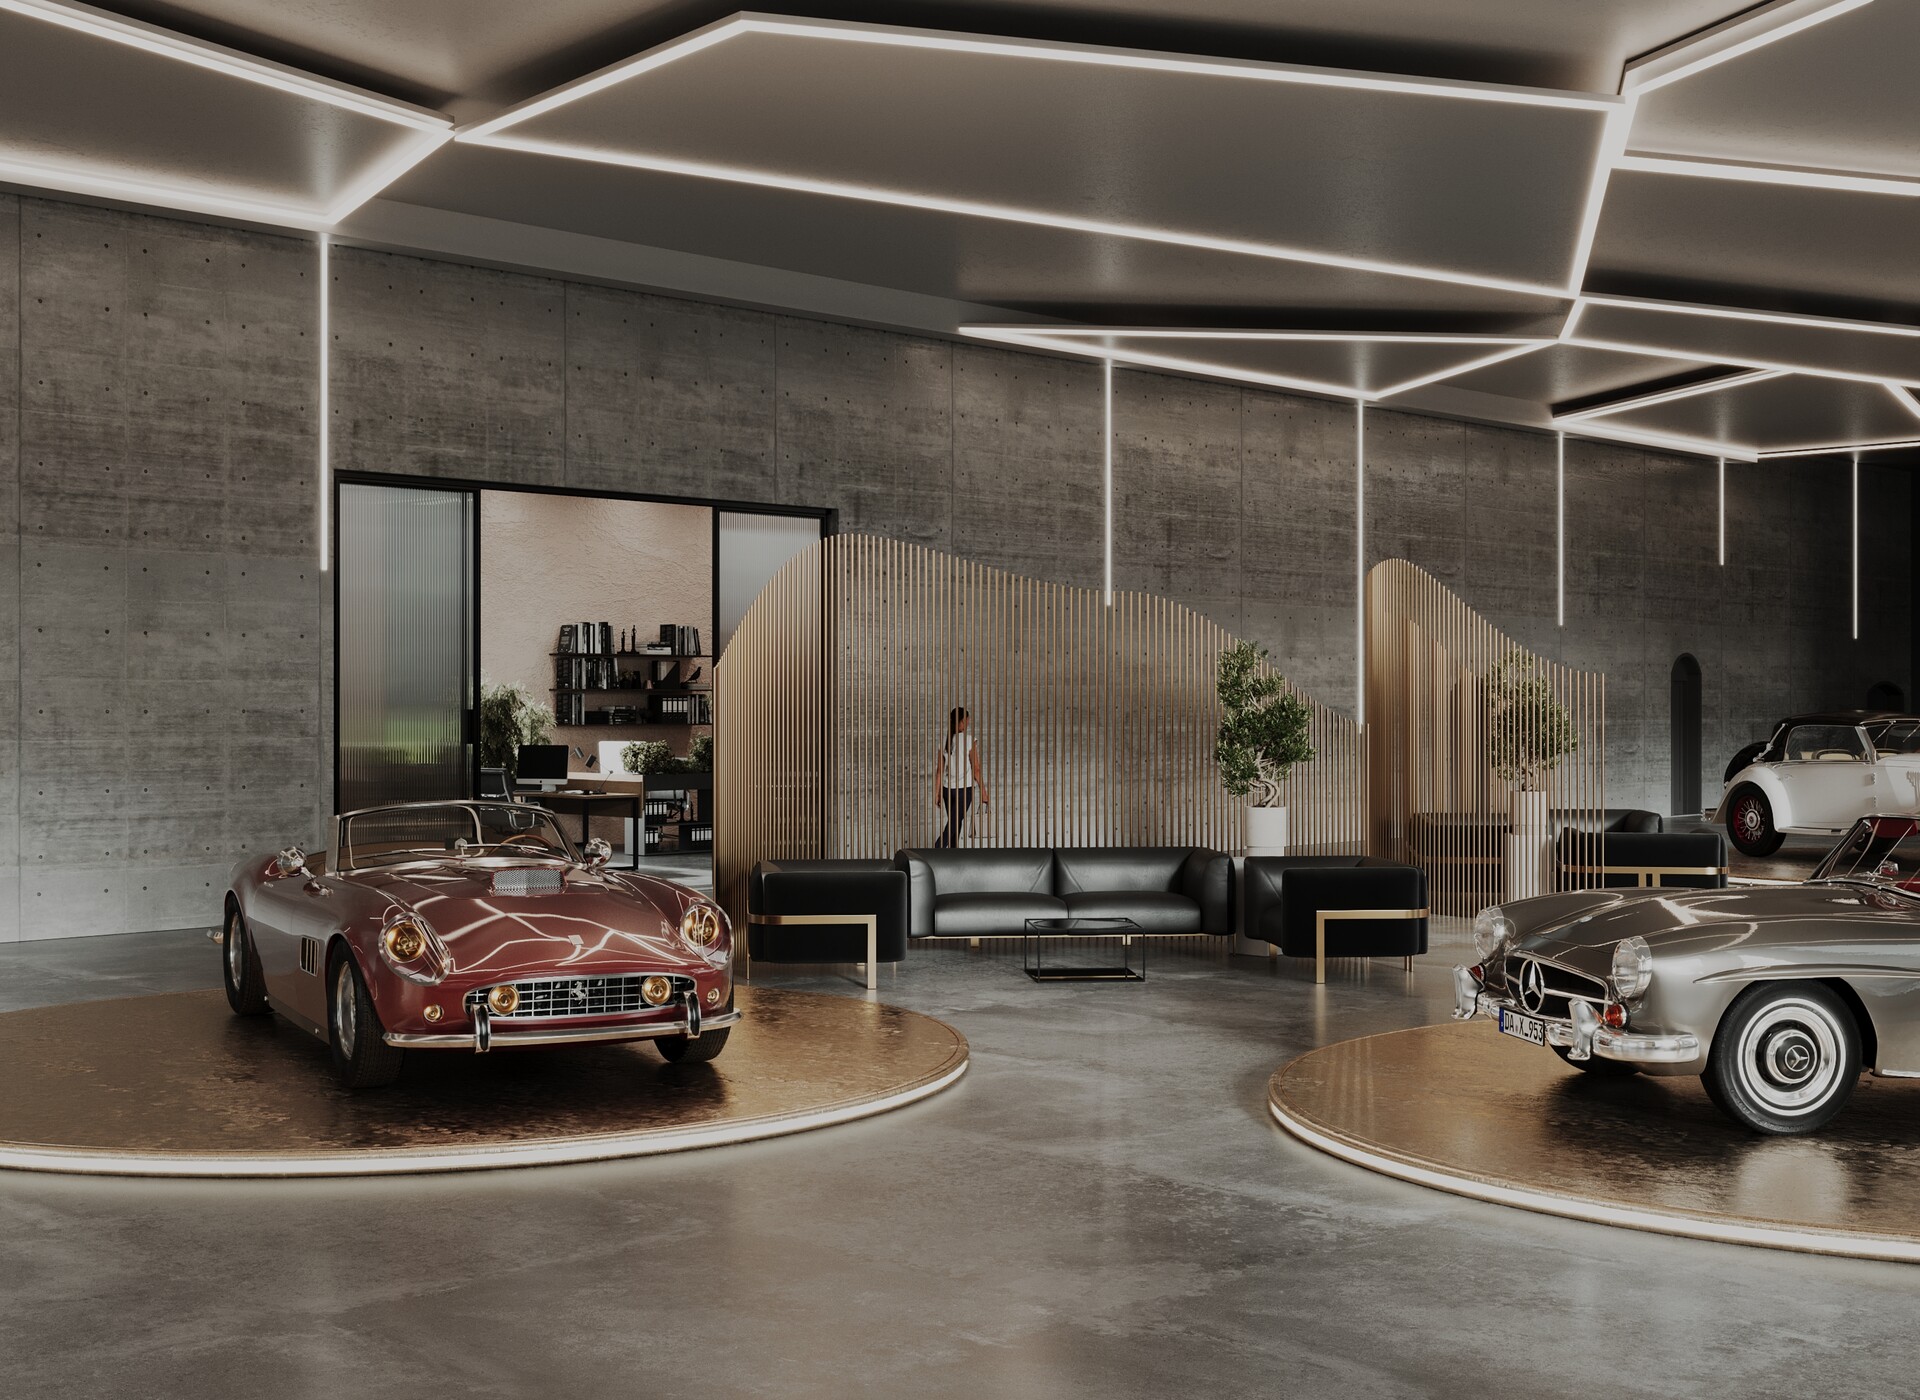 ArtStation - Car show room interior design